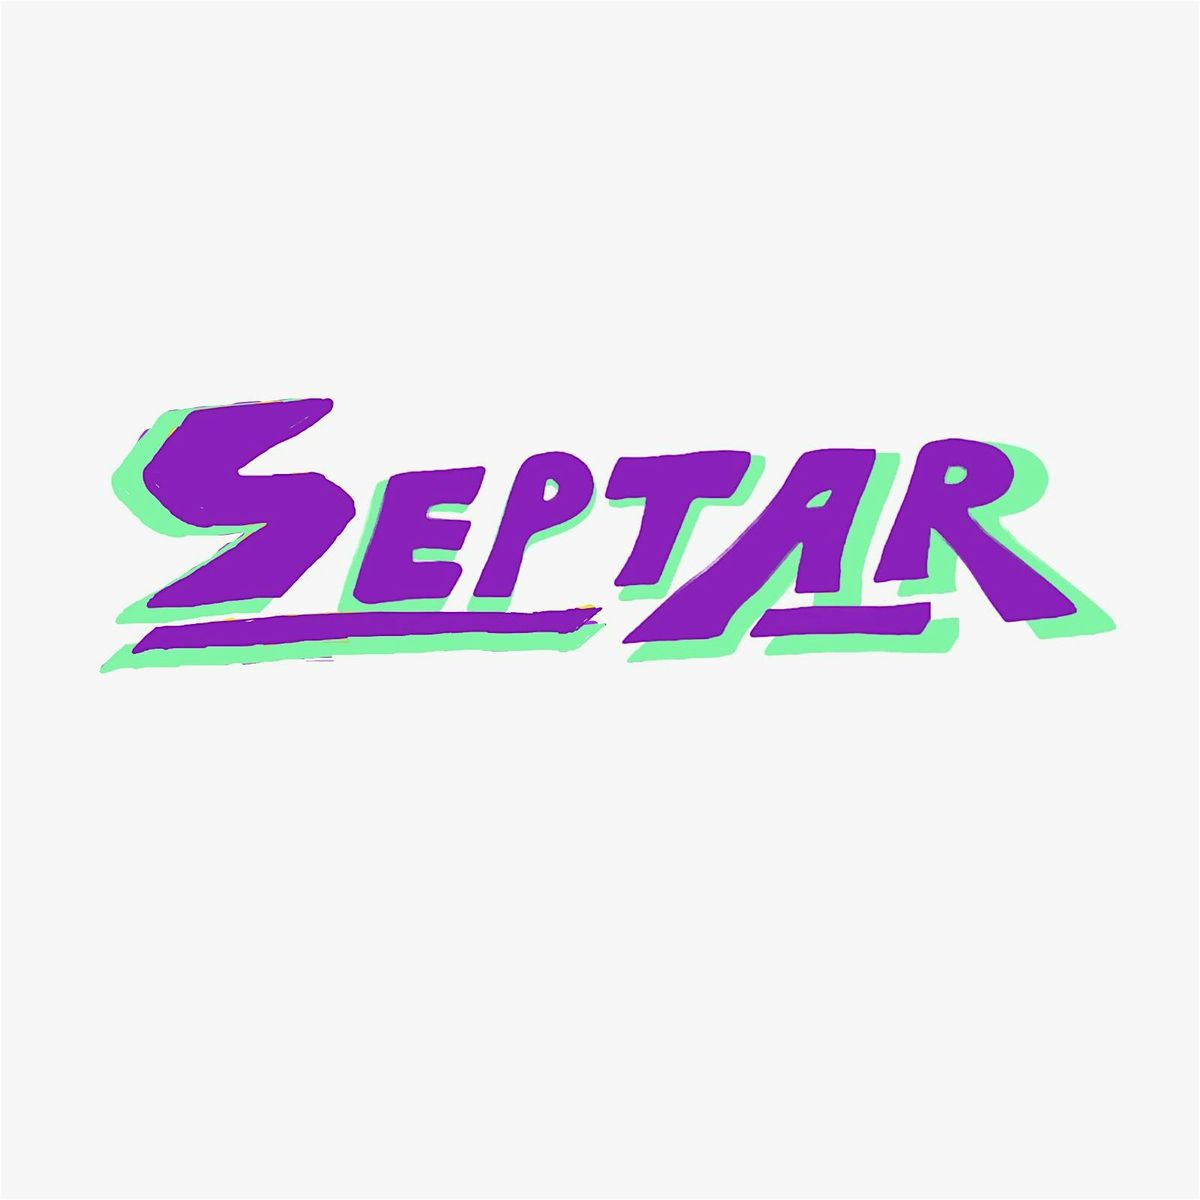 Septar: Let That Sink In